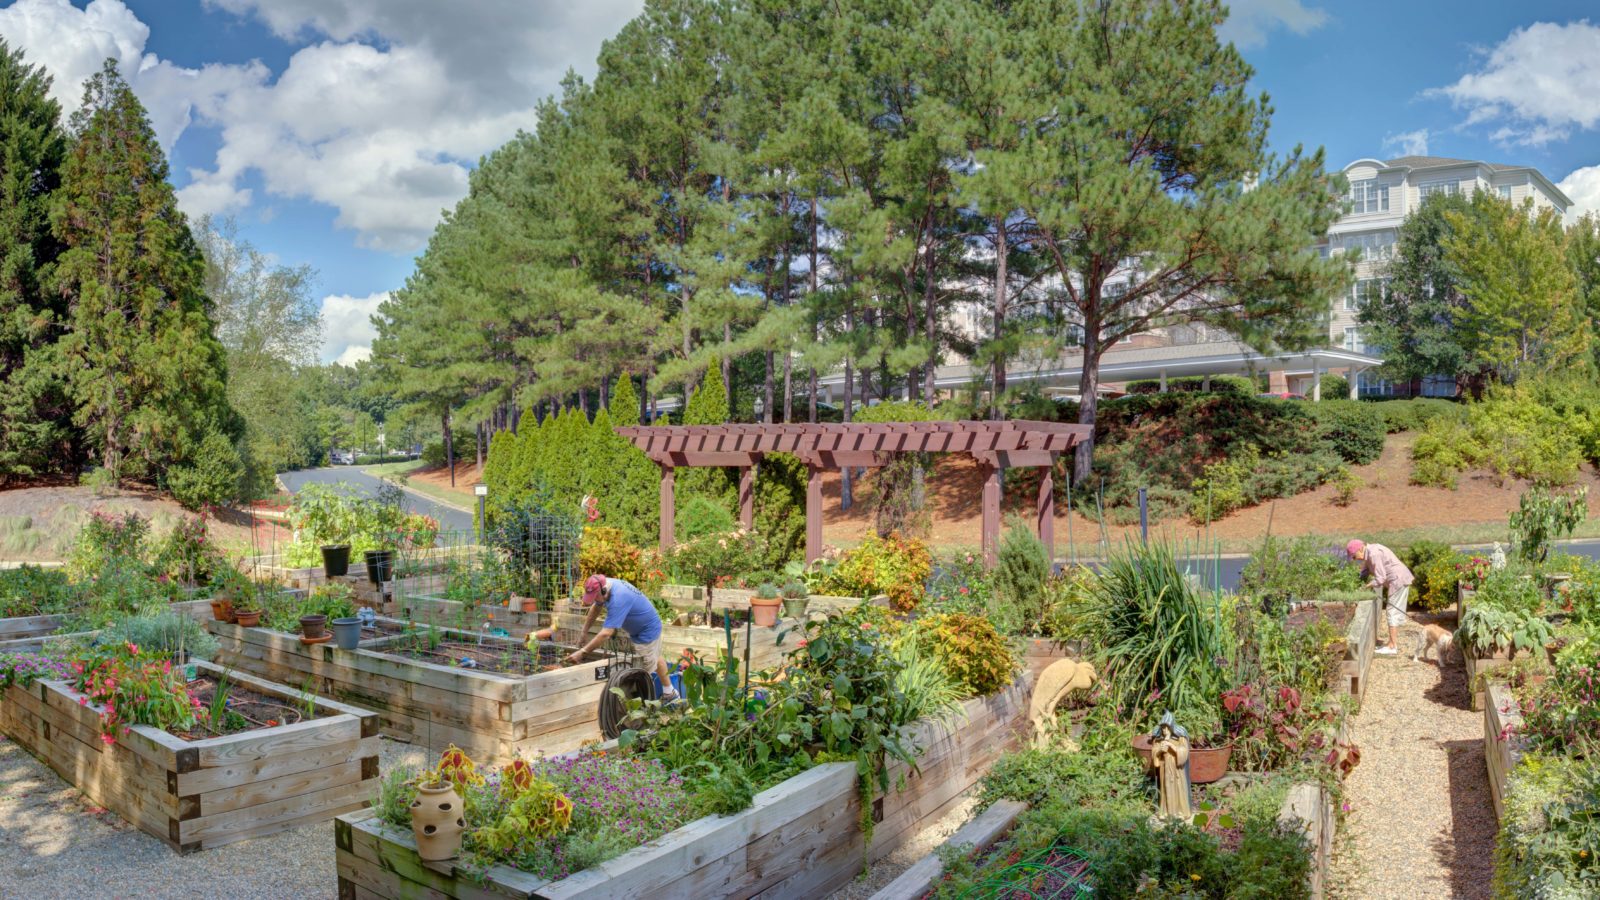 The Cypress Community Garden